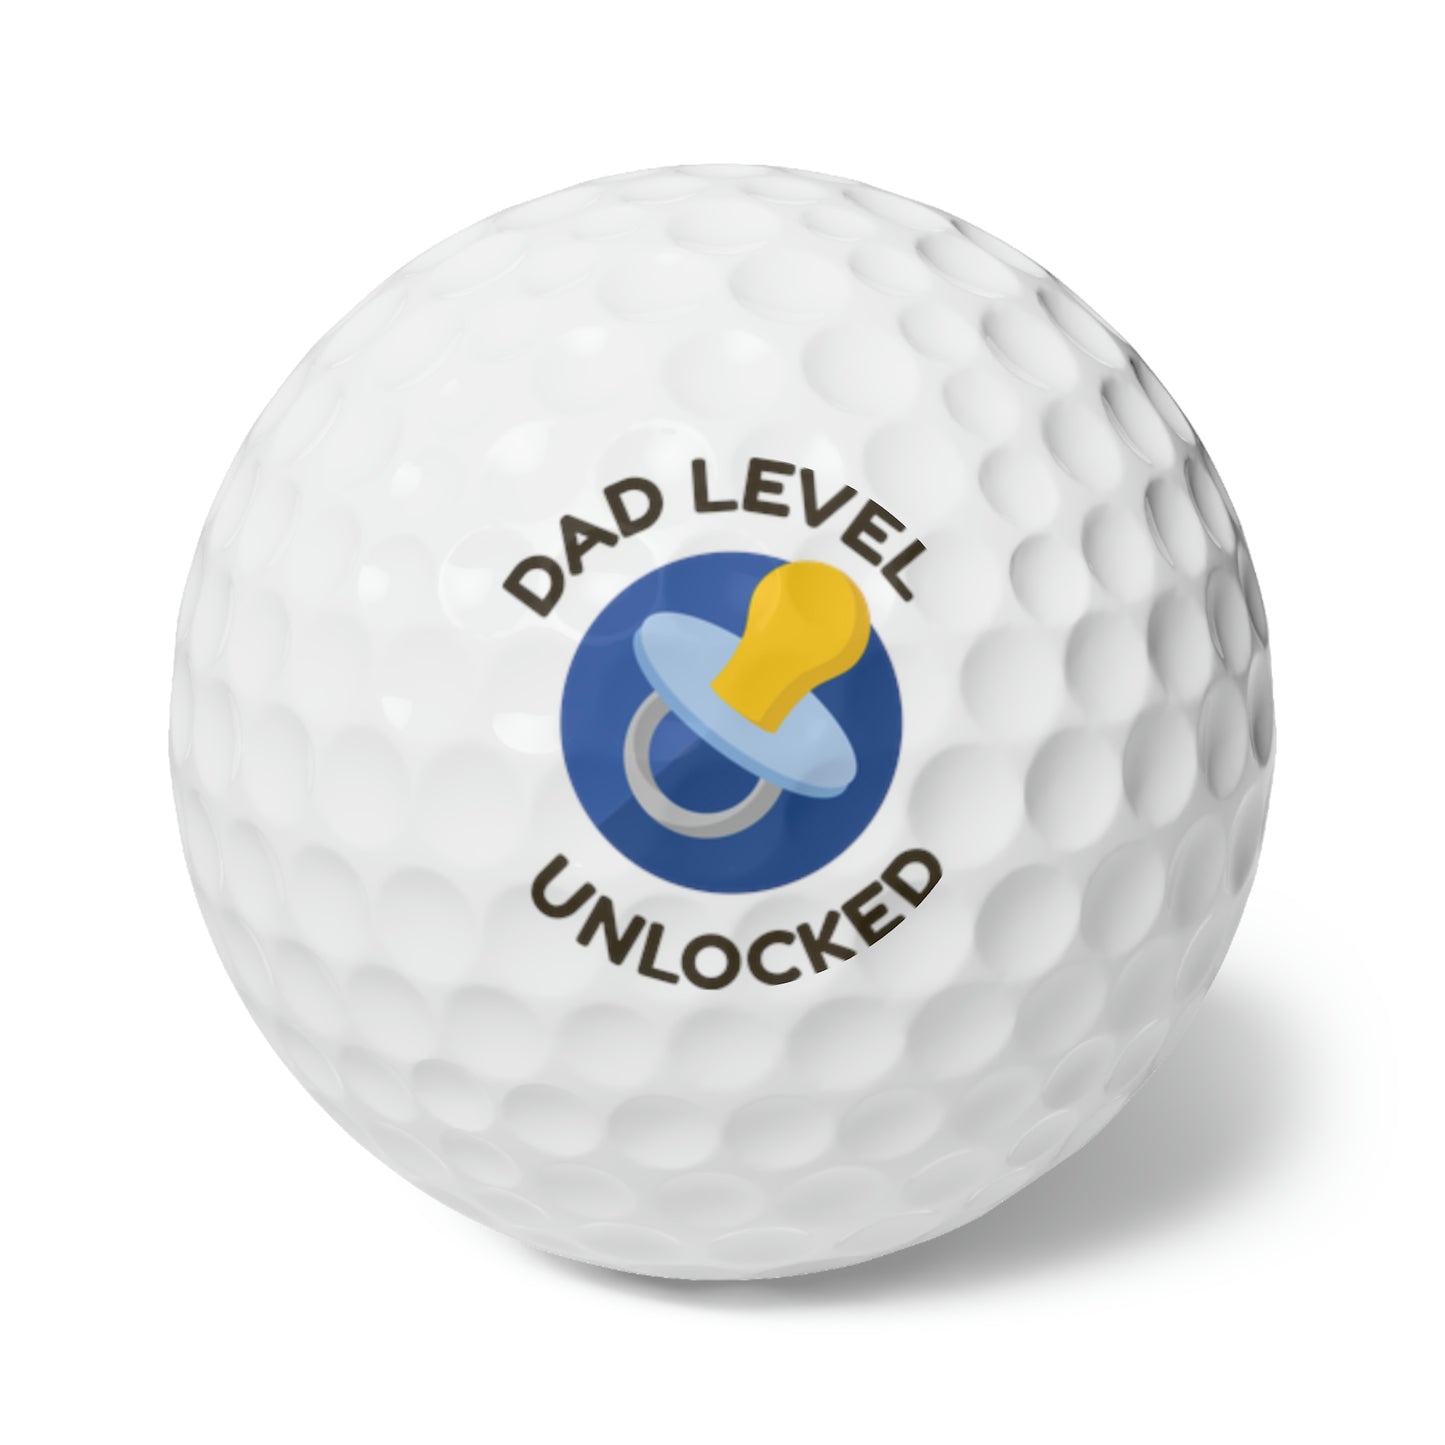 Dad Level Unlocked Golf Balls, 6pcs